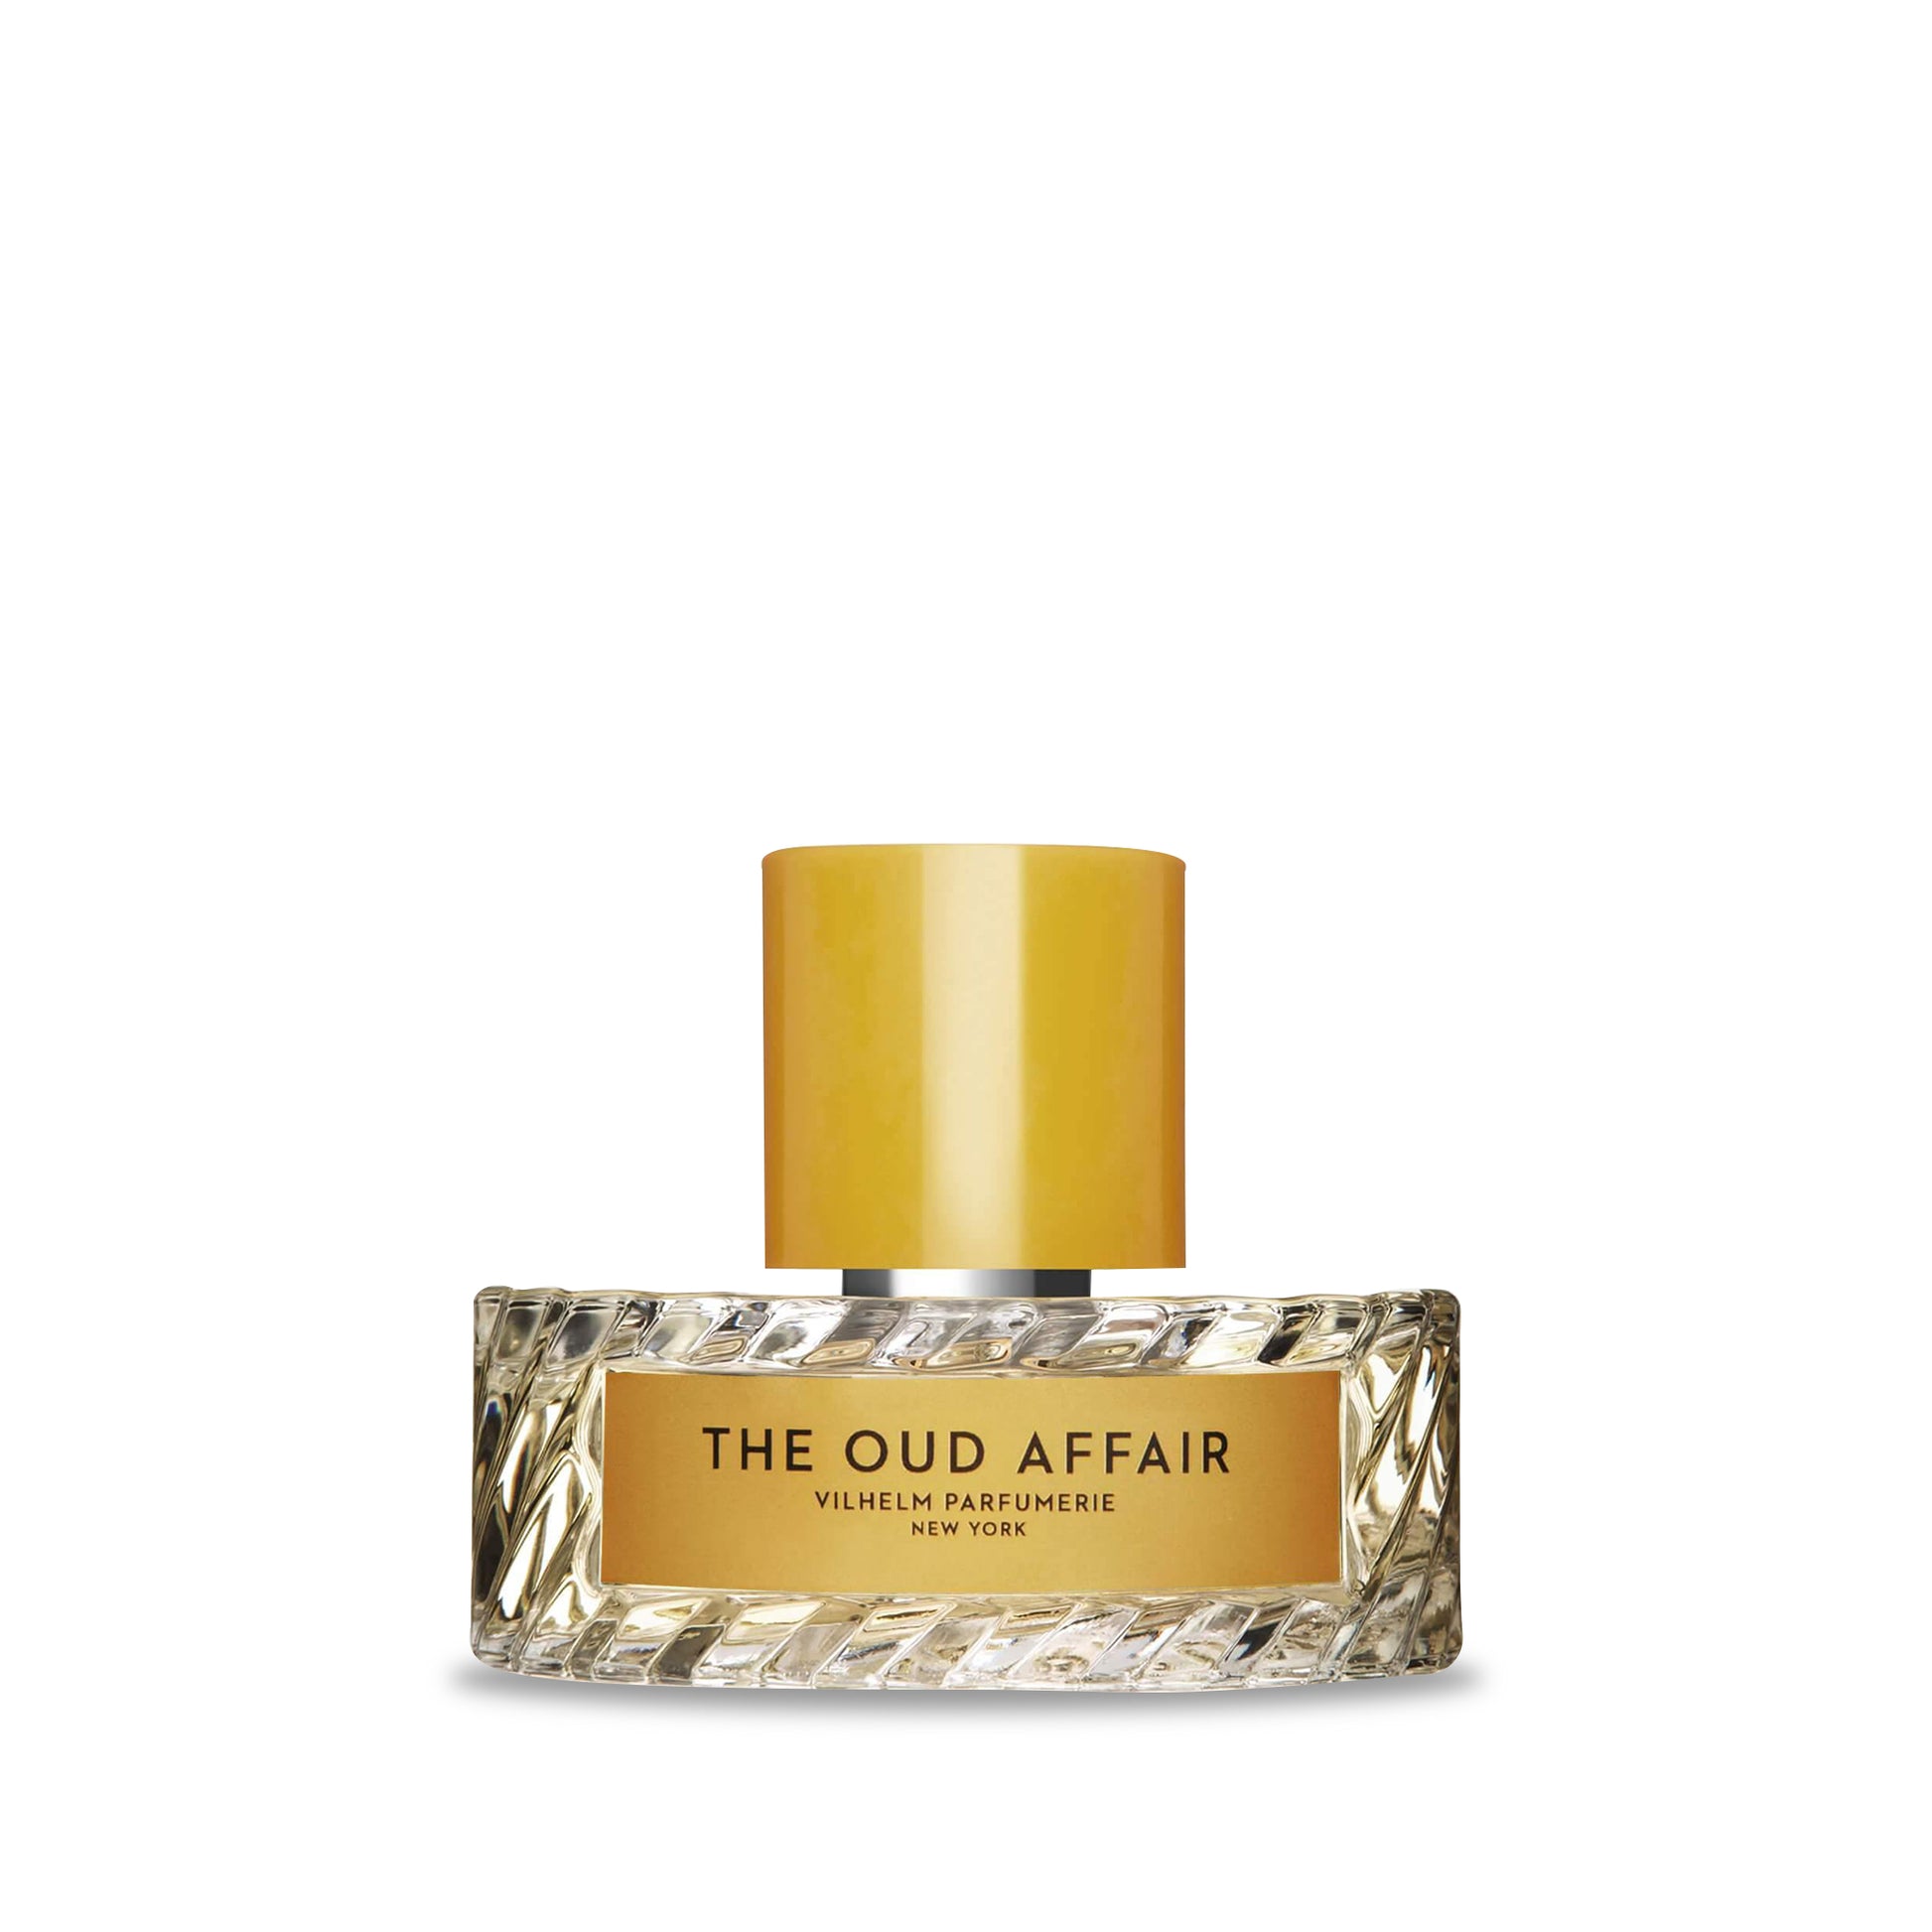 The Oud Affair Vilhelm Parfumerie